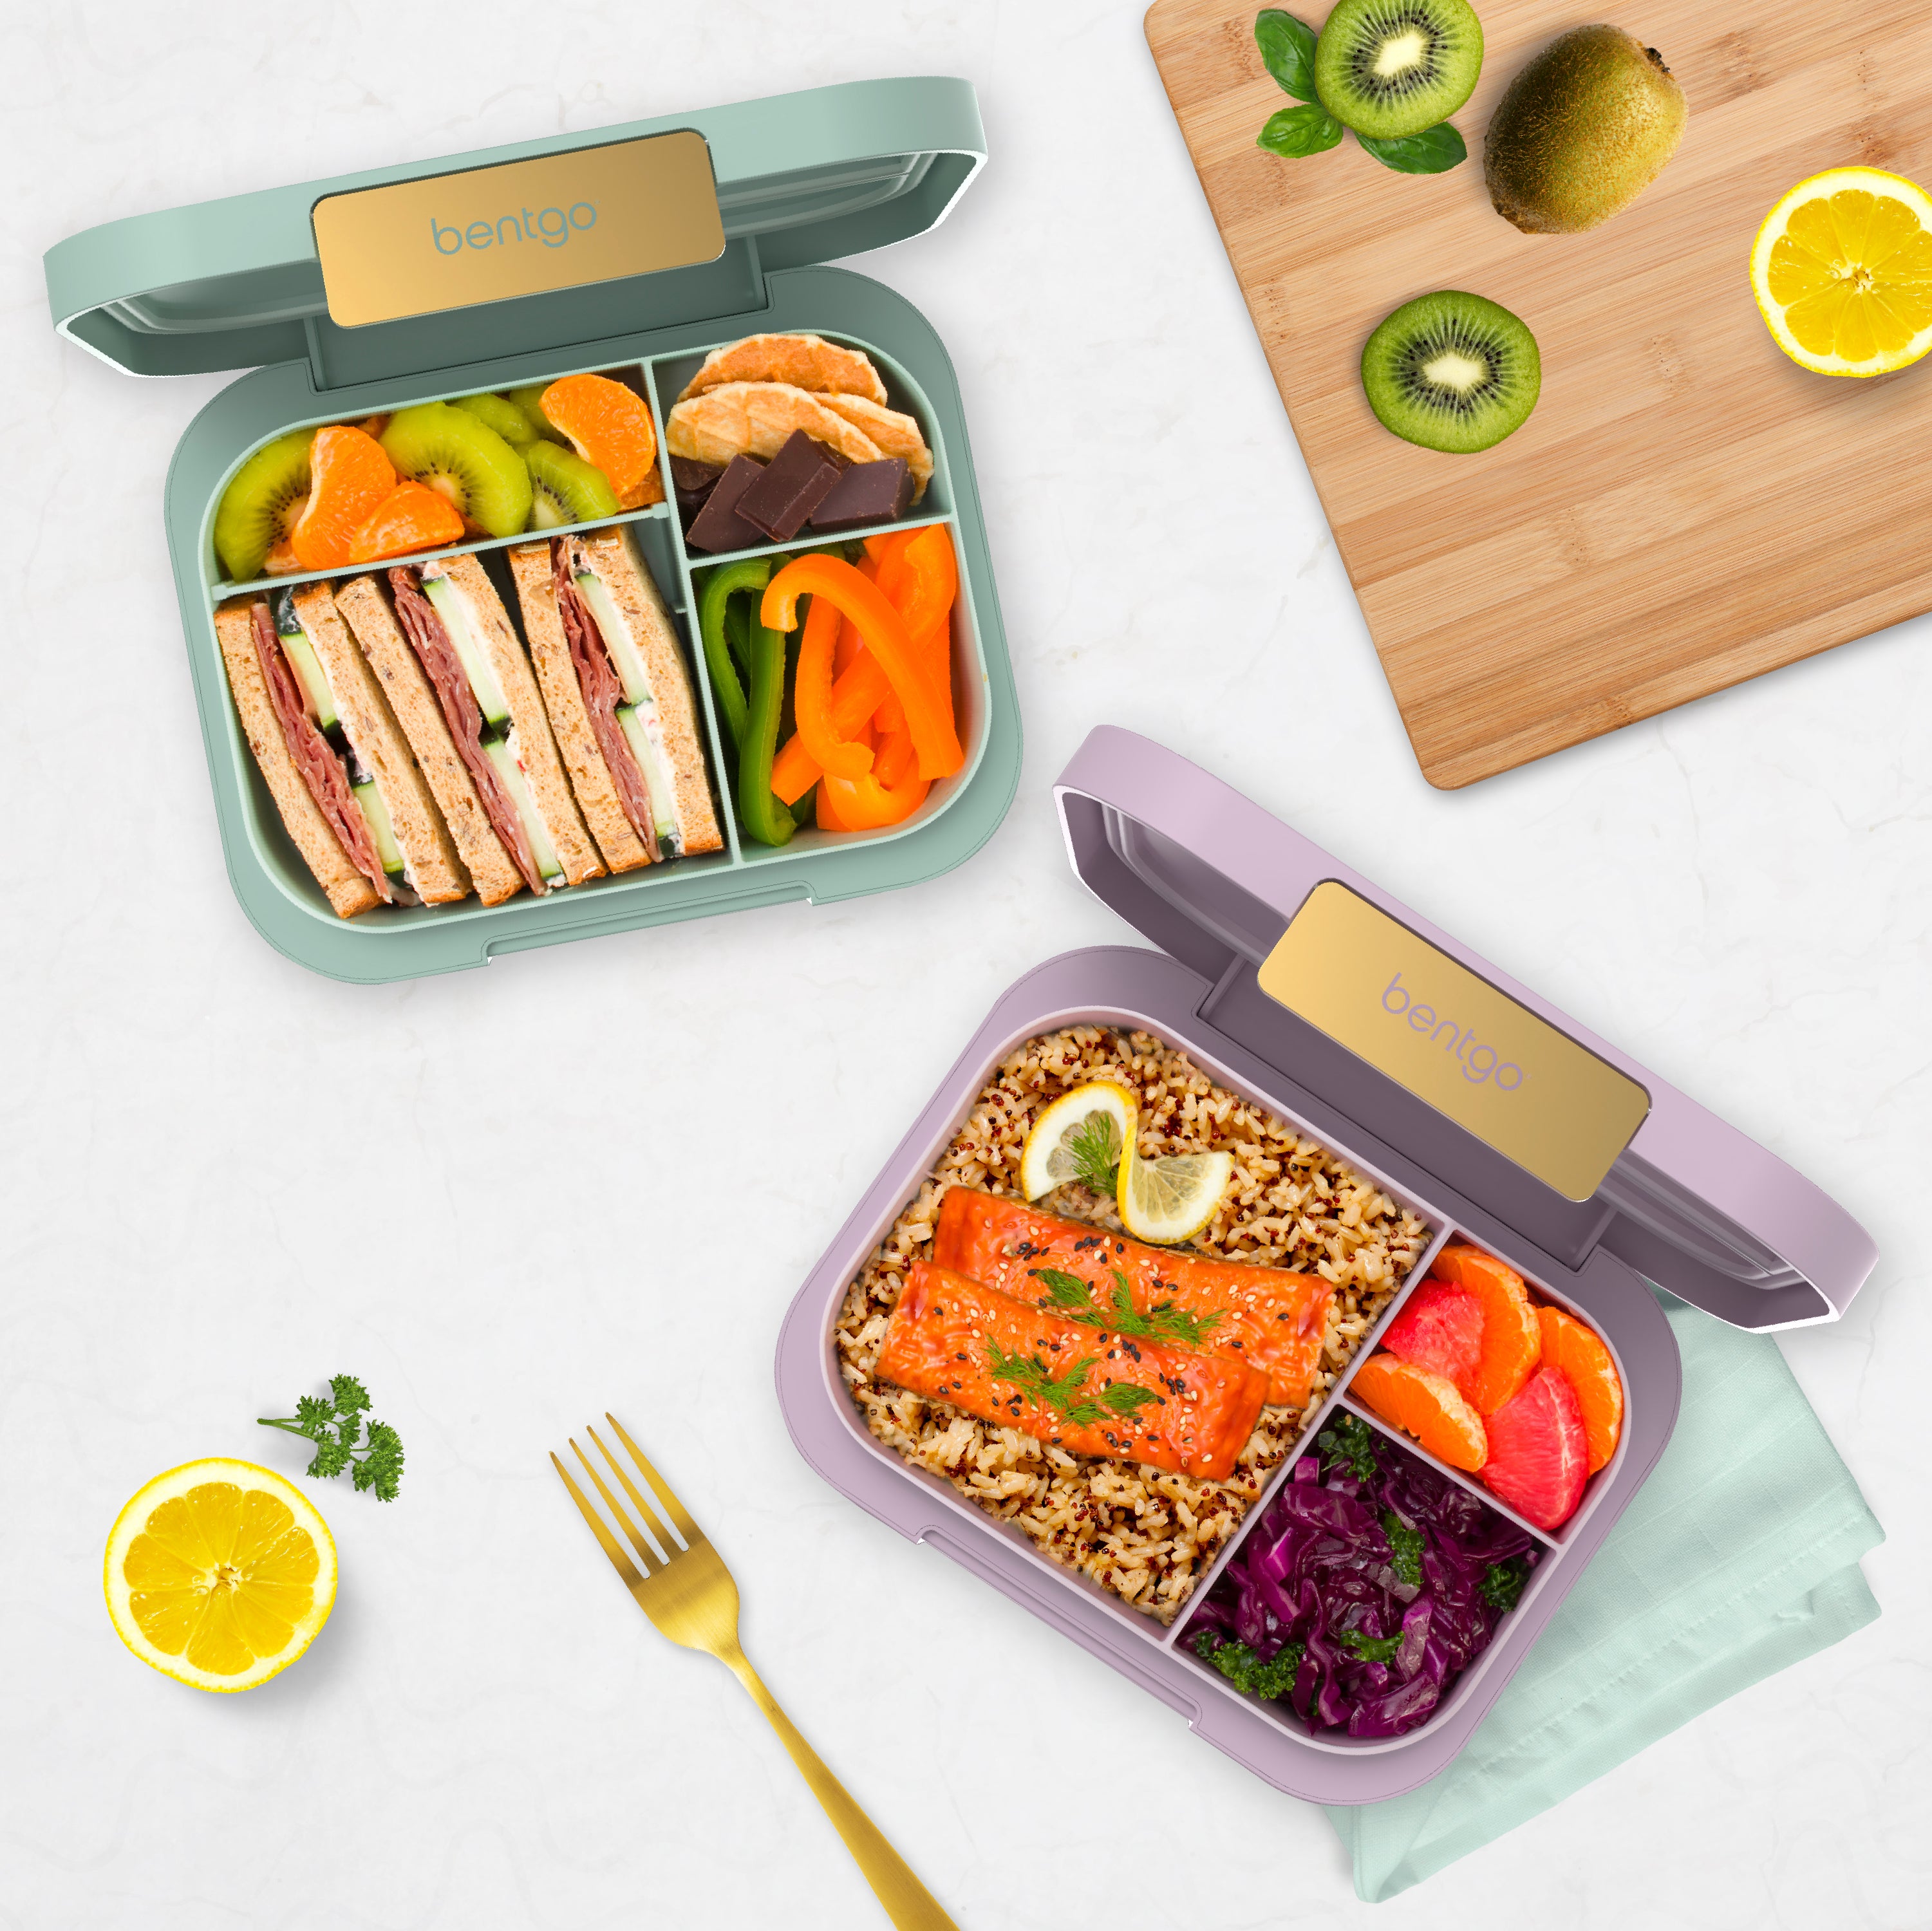 Bentgo Modern Lunch Box & Snack Cup